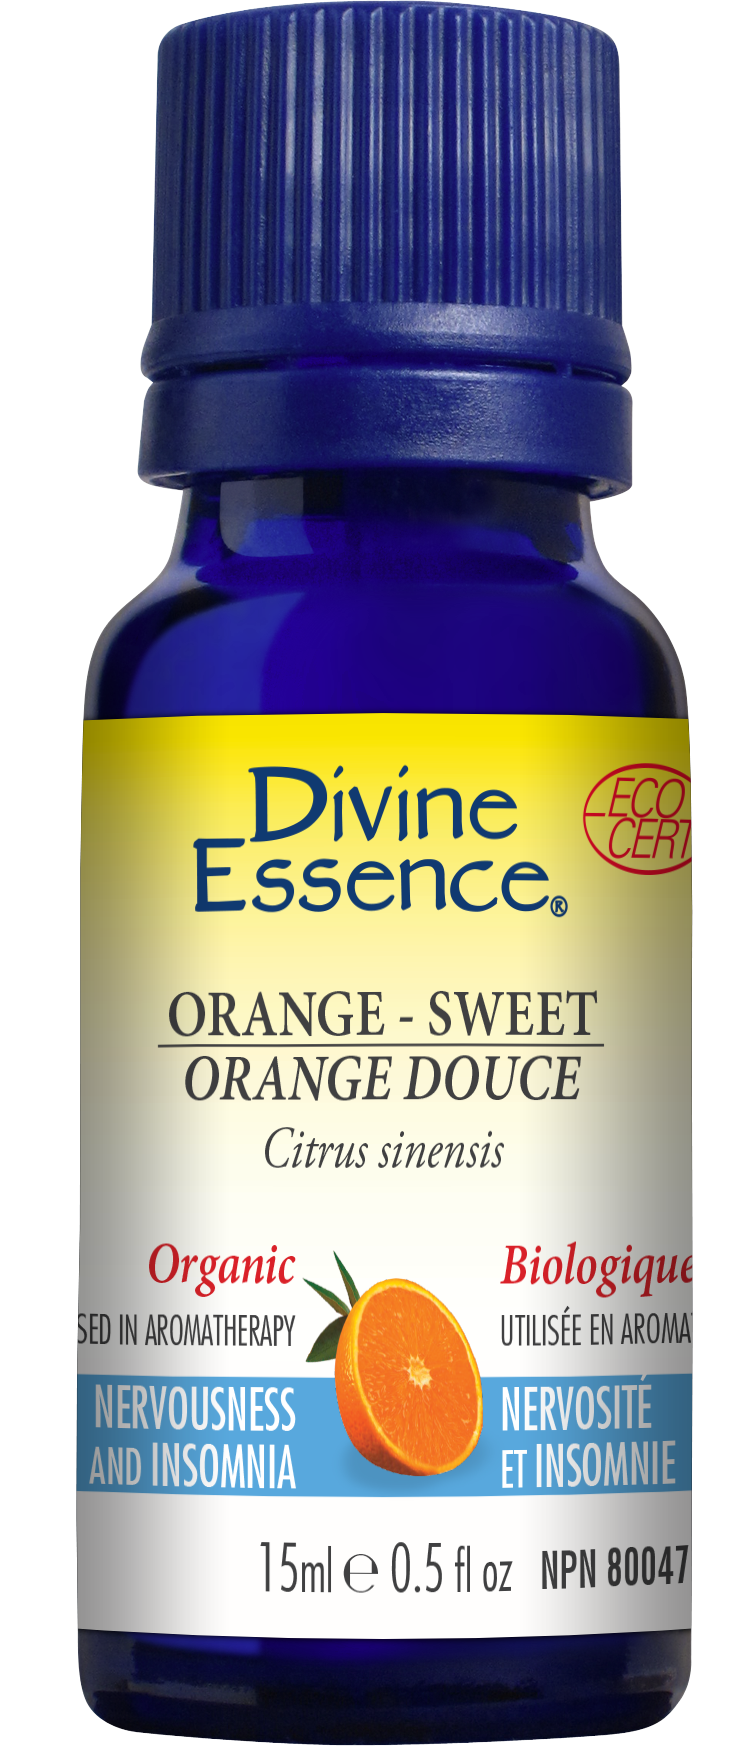 Divine essence, extrait d'huile essentielle orange douce bio - Divine essence